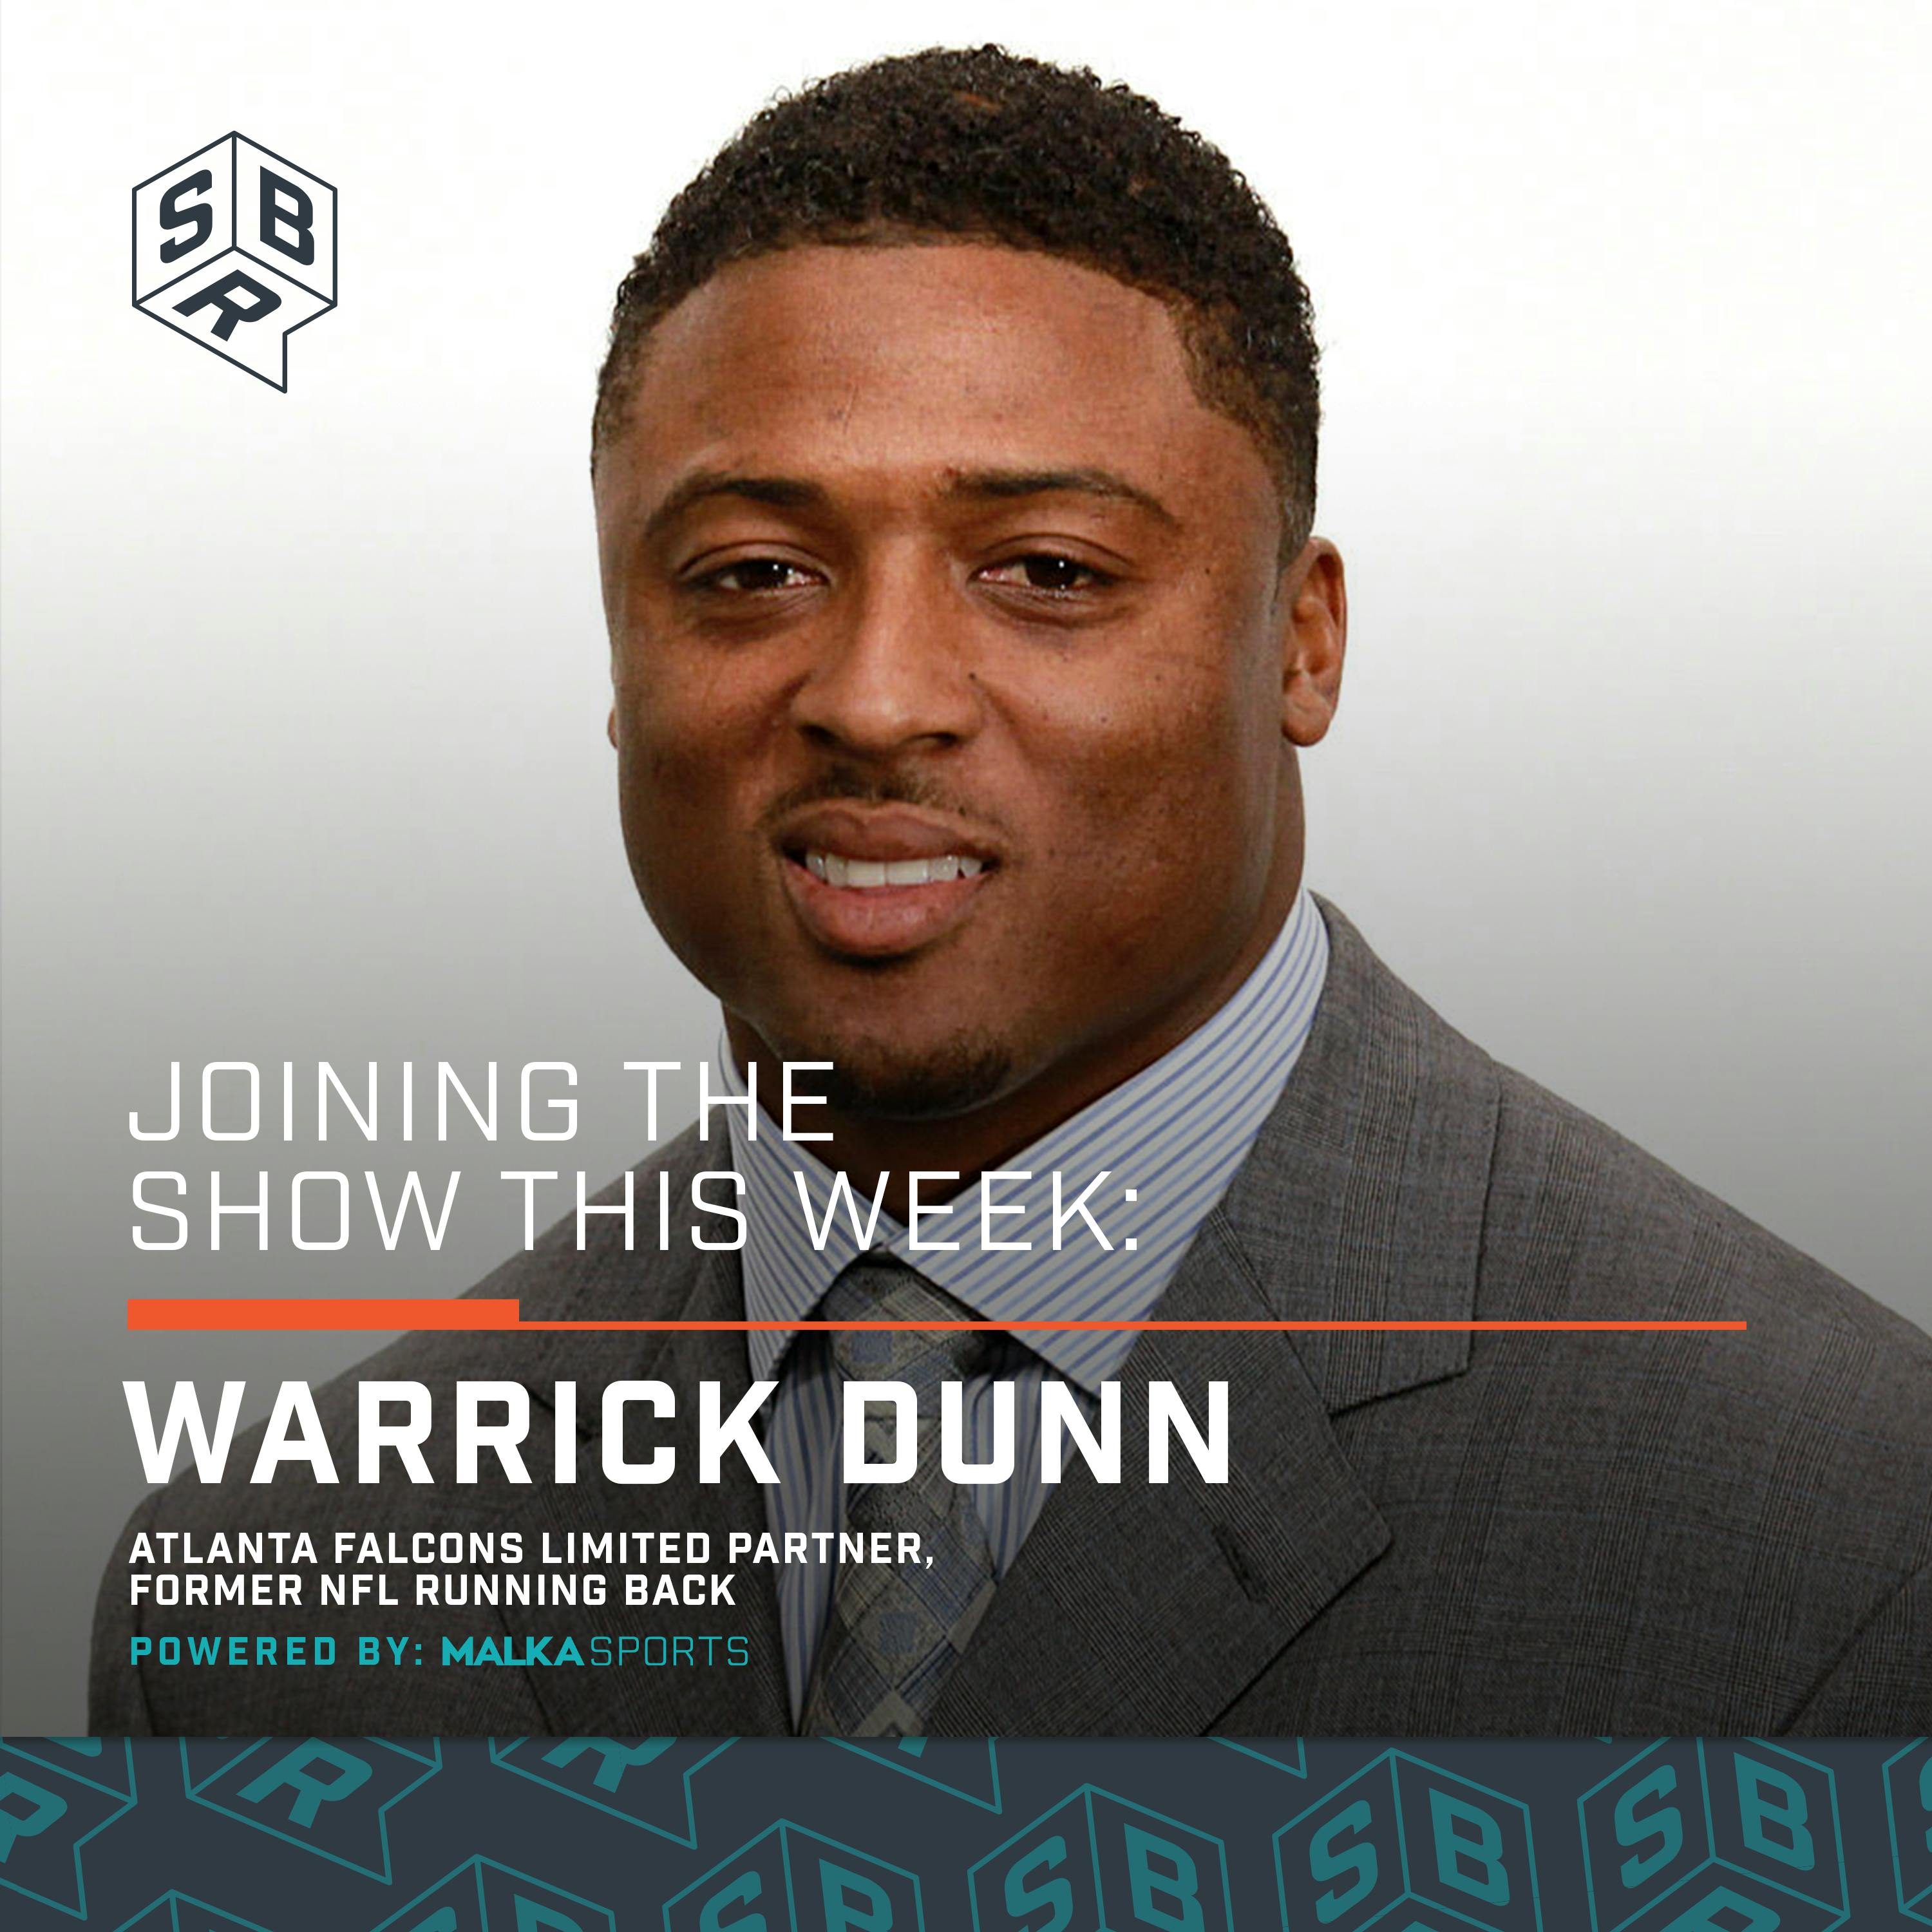 Warrick Dunn (@WarrickDunn) - Atlanta Falcons Limited Partner, Former NFL RB